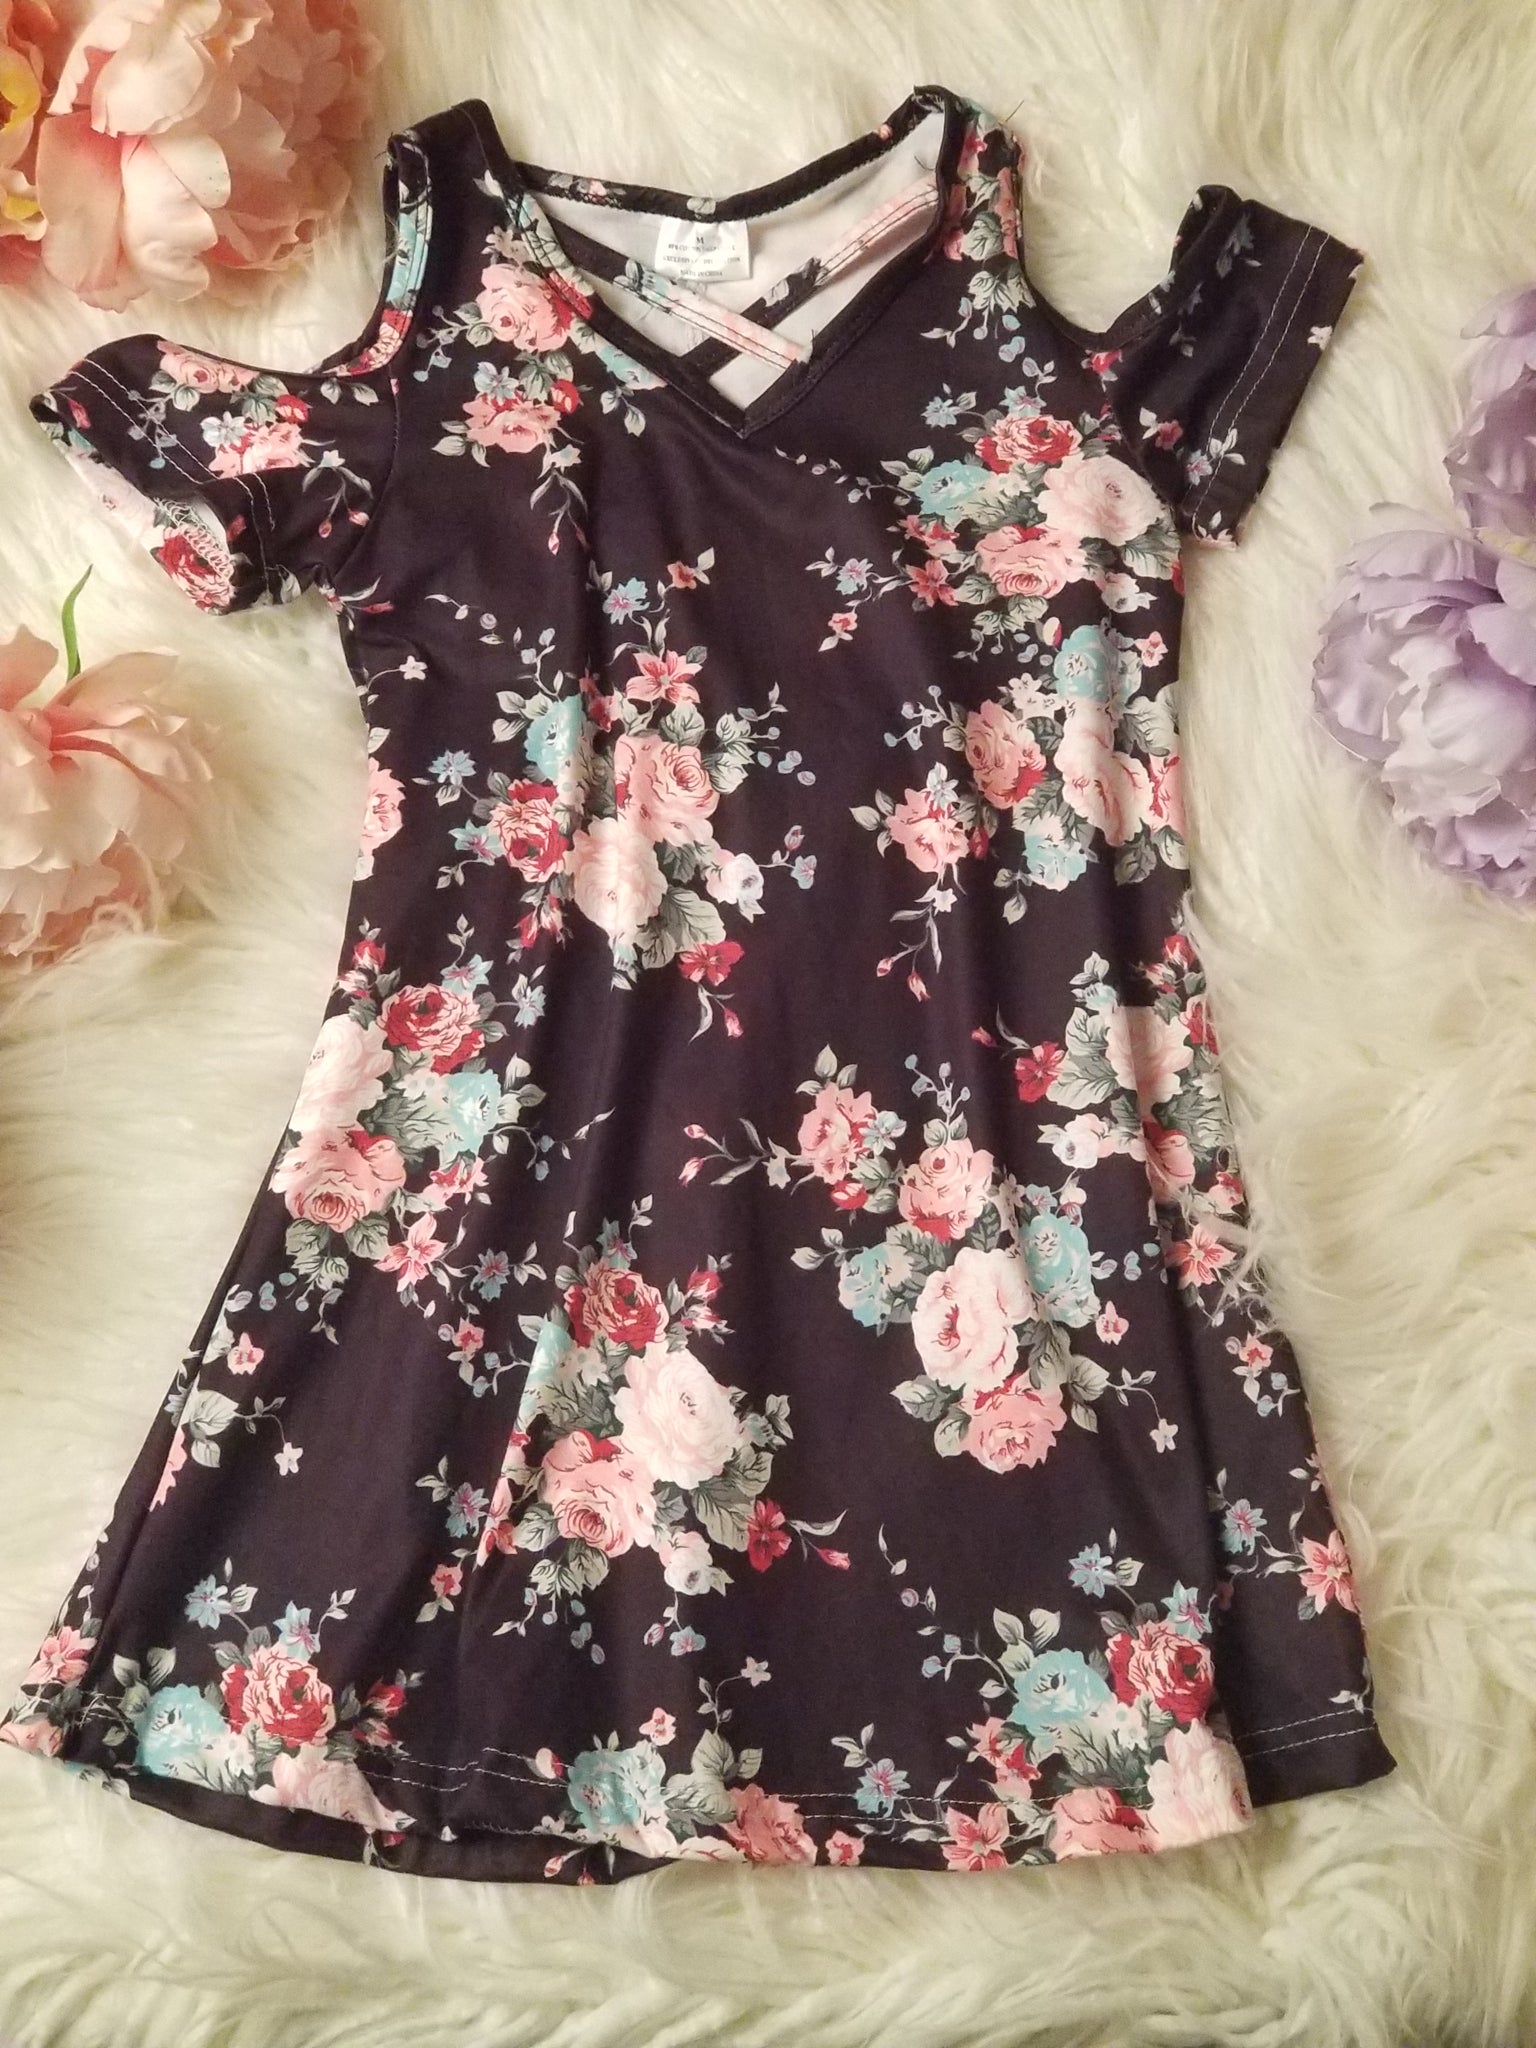 Black criss cross floral dress